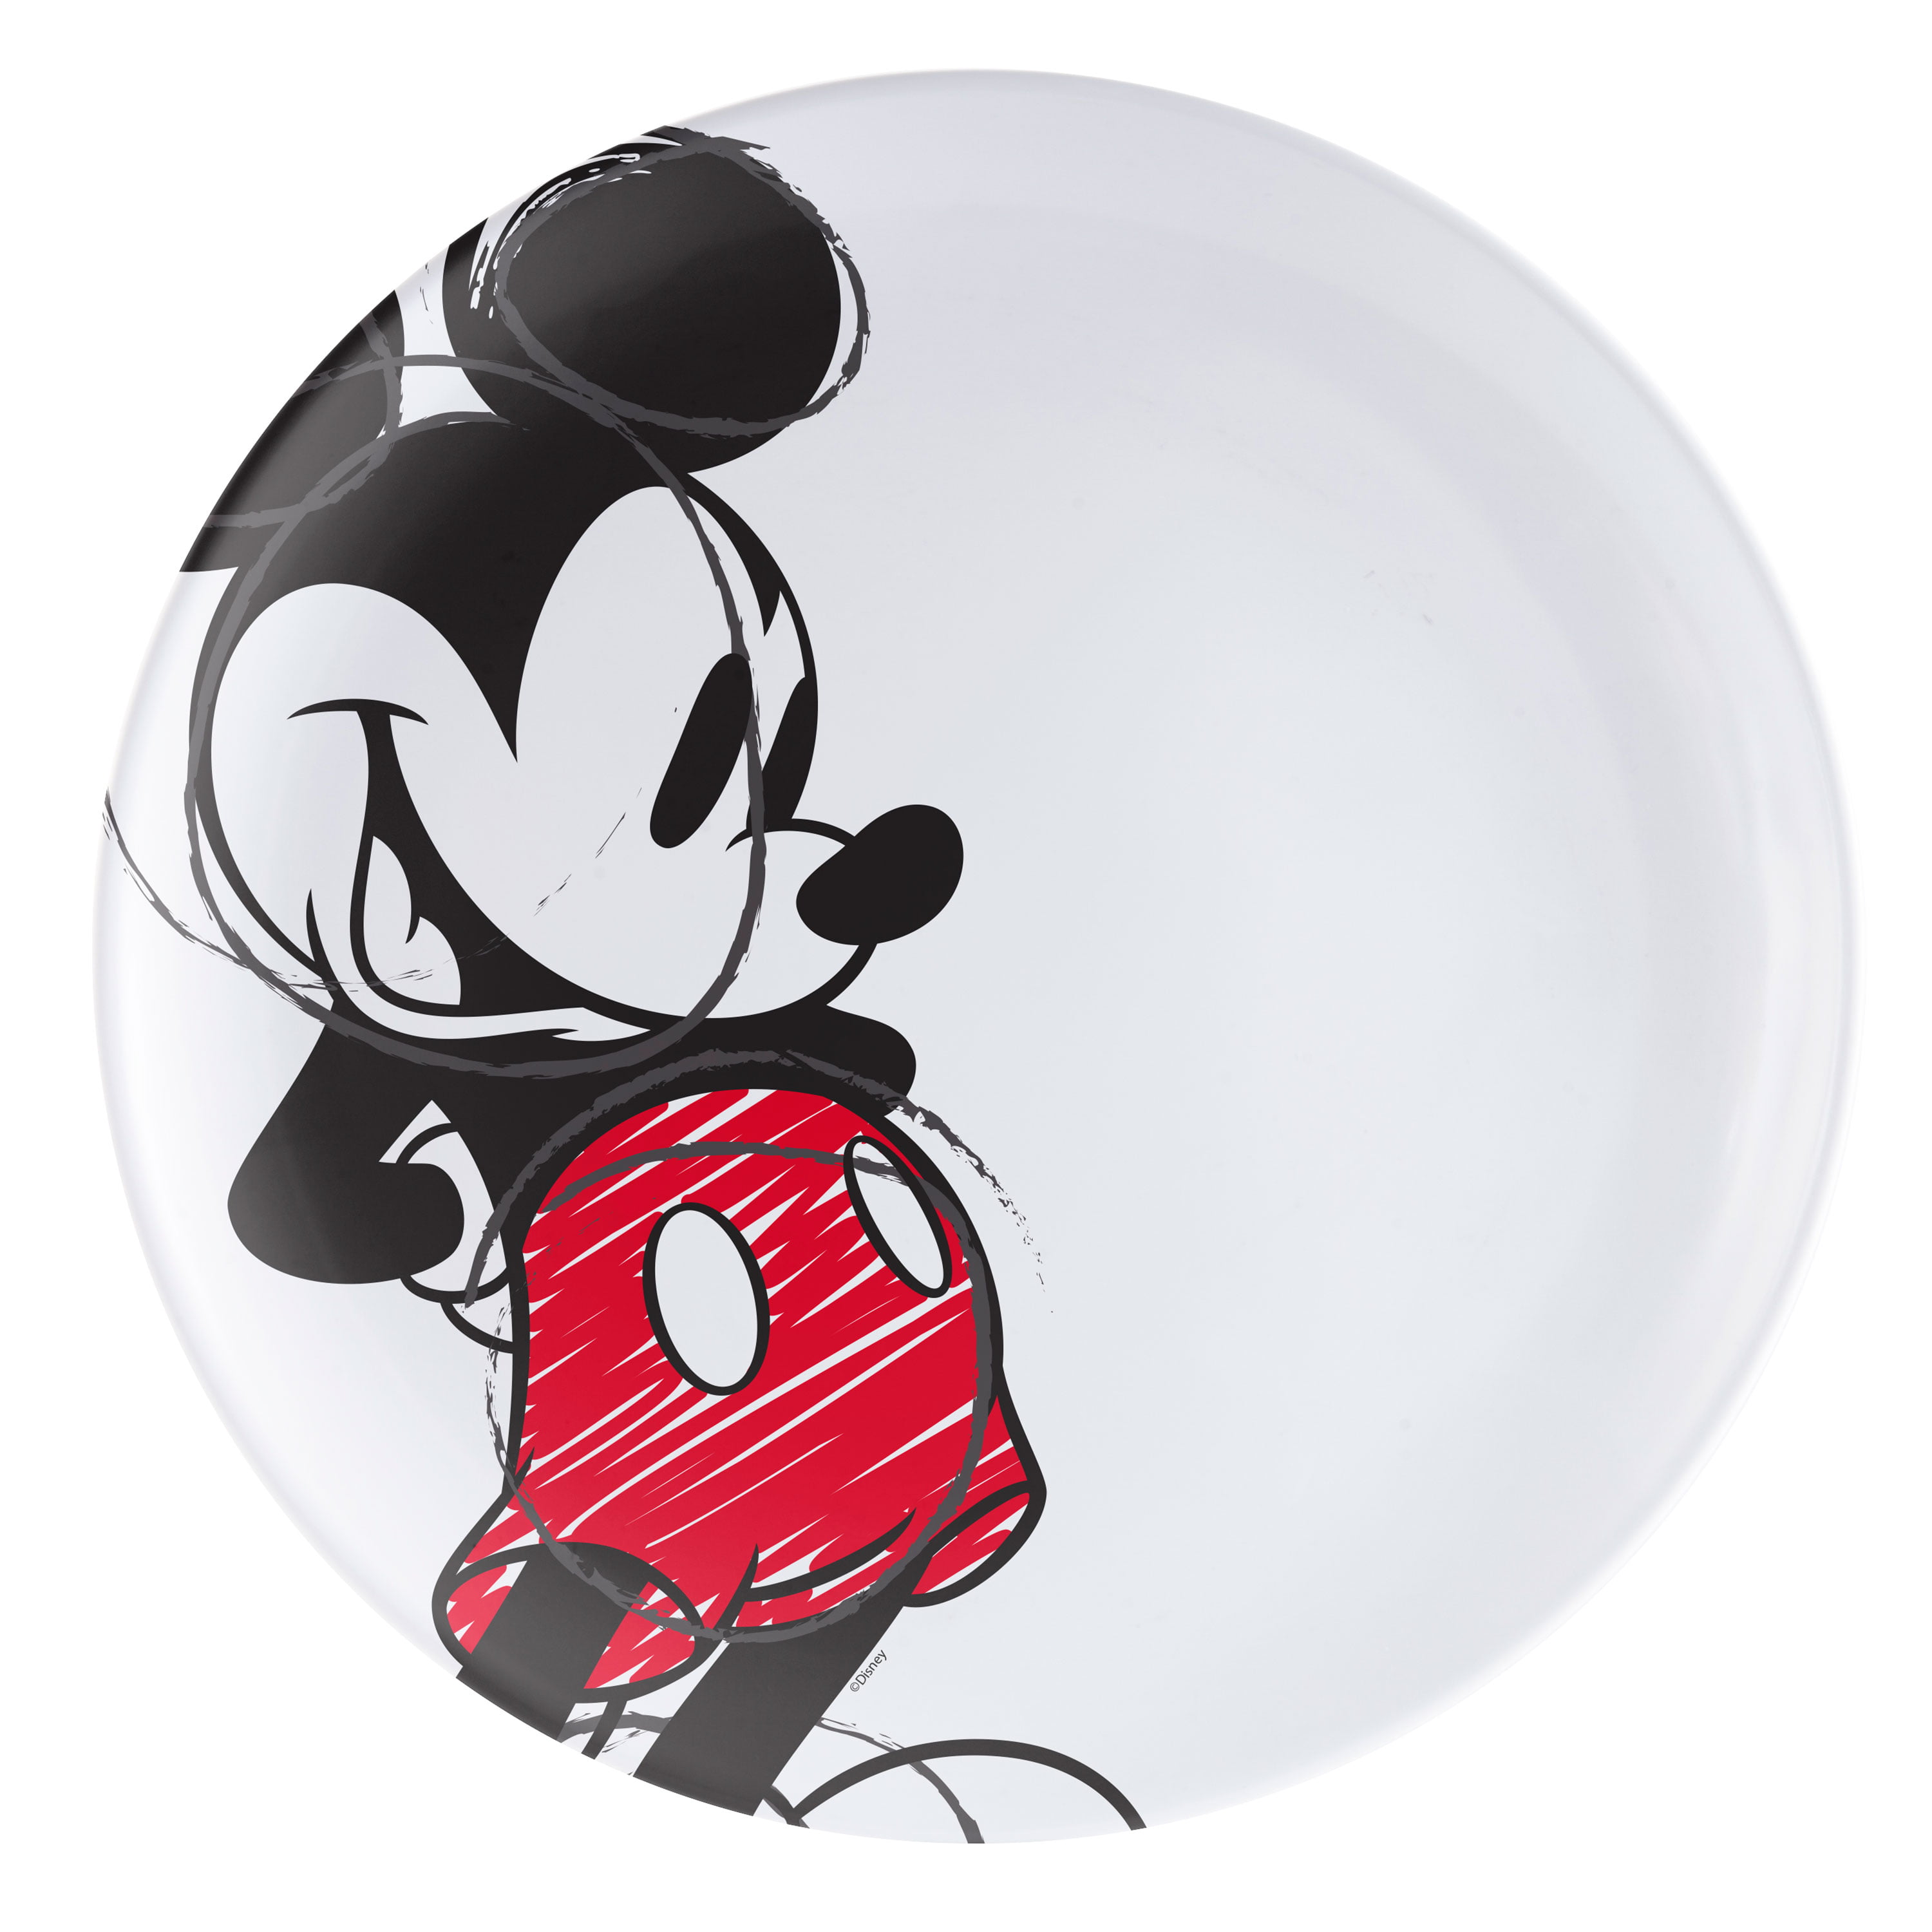 Disney Anime Mickey Mouse Minnie Kawaii Cartoon Tableware Ceramic